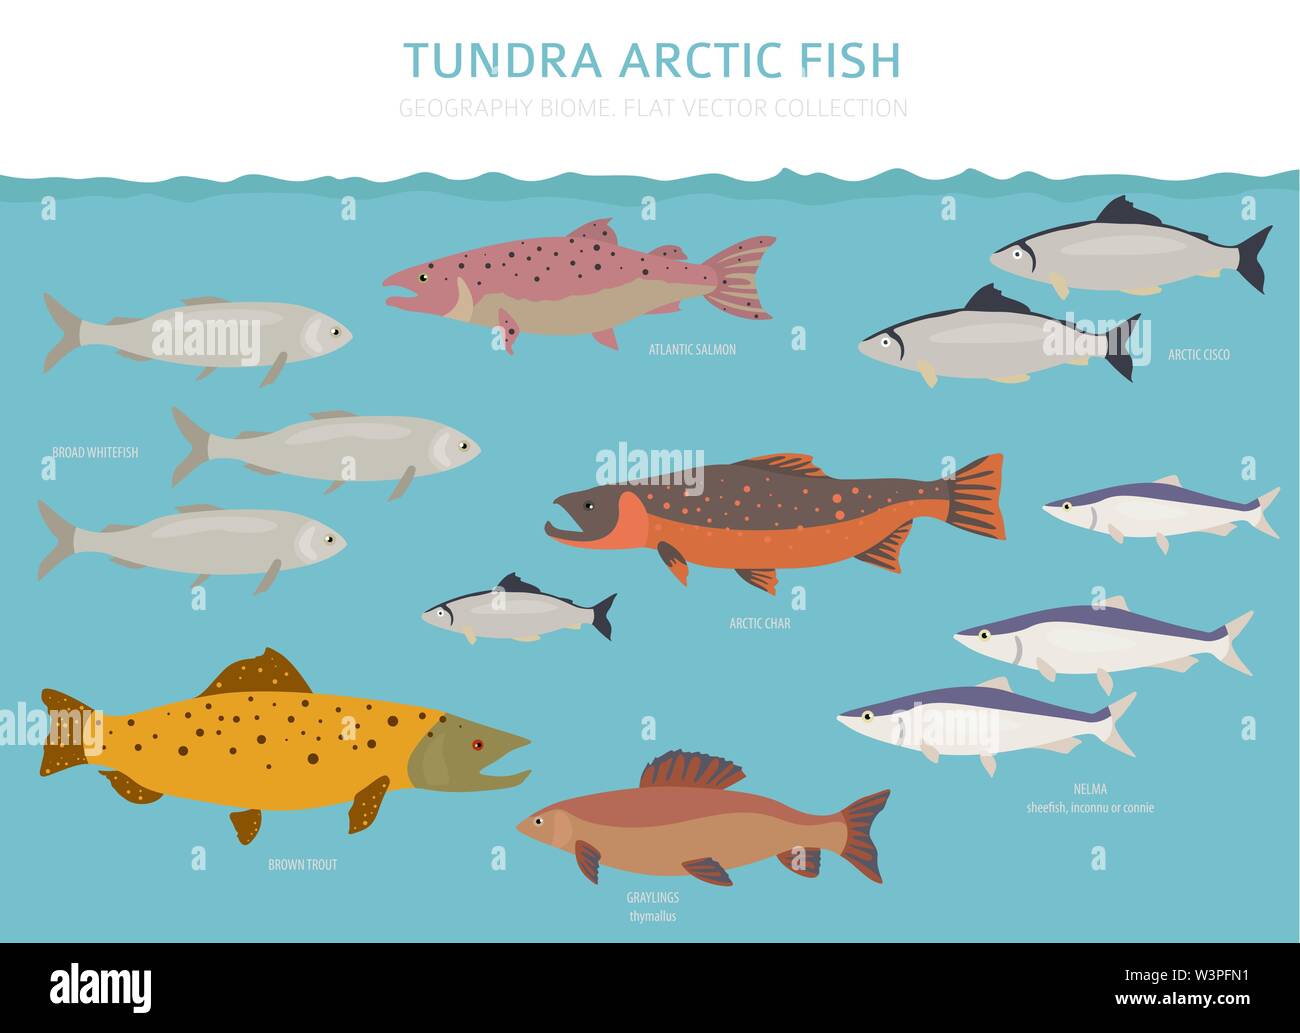 Tundra biome. Terrestrial ecosystem world map. Arctic fish infographic design. Vector illustration Stock Vector